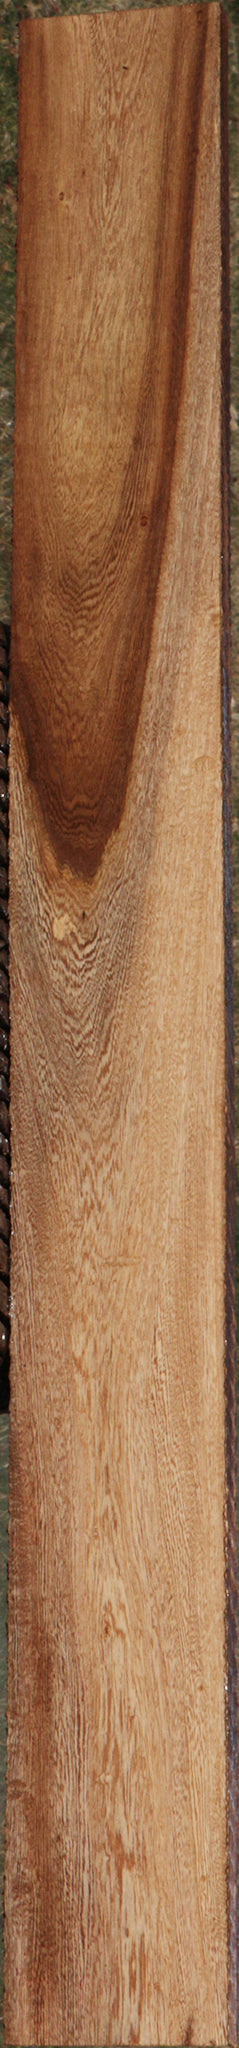 Louro Preto Lumber